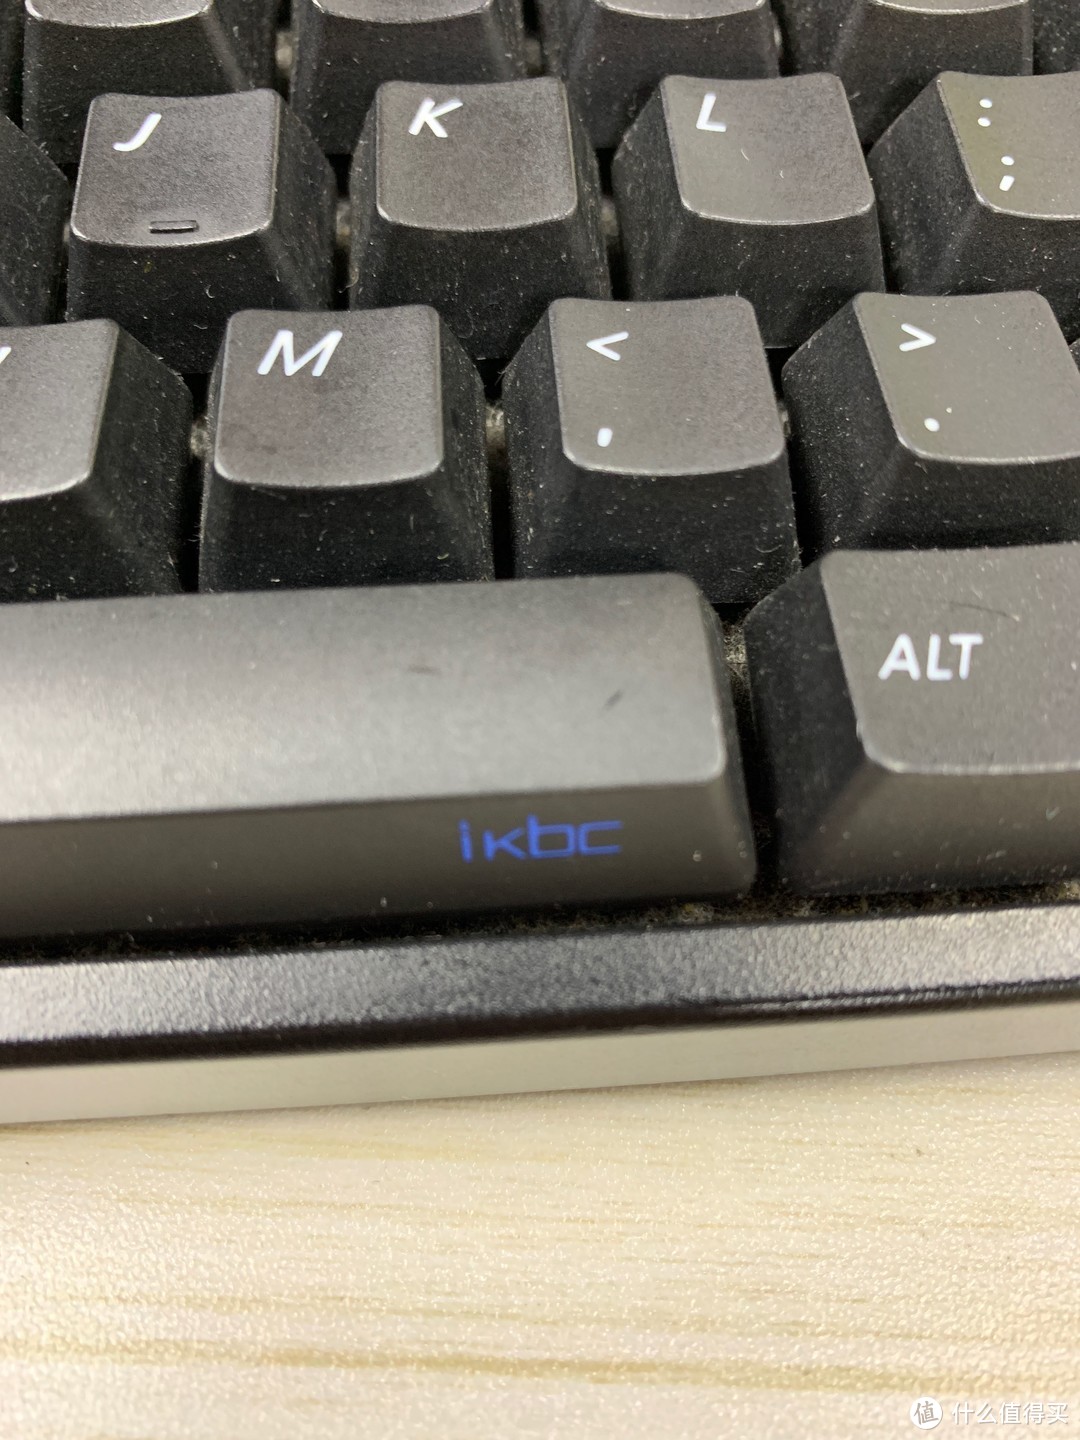 ikbc黑轴机械键盘测评